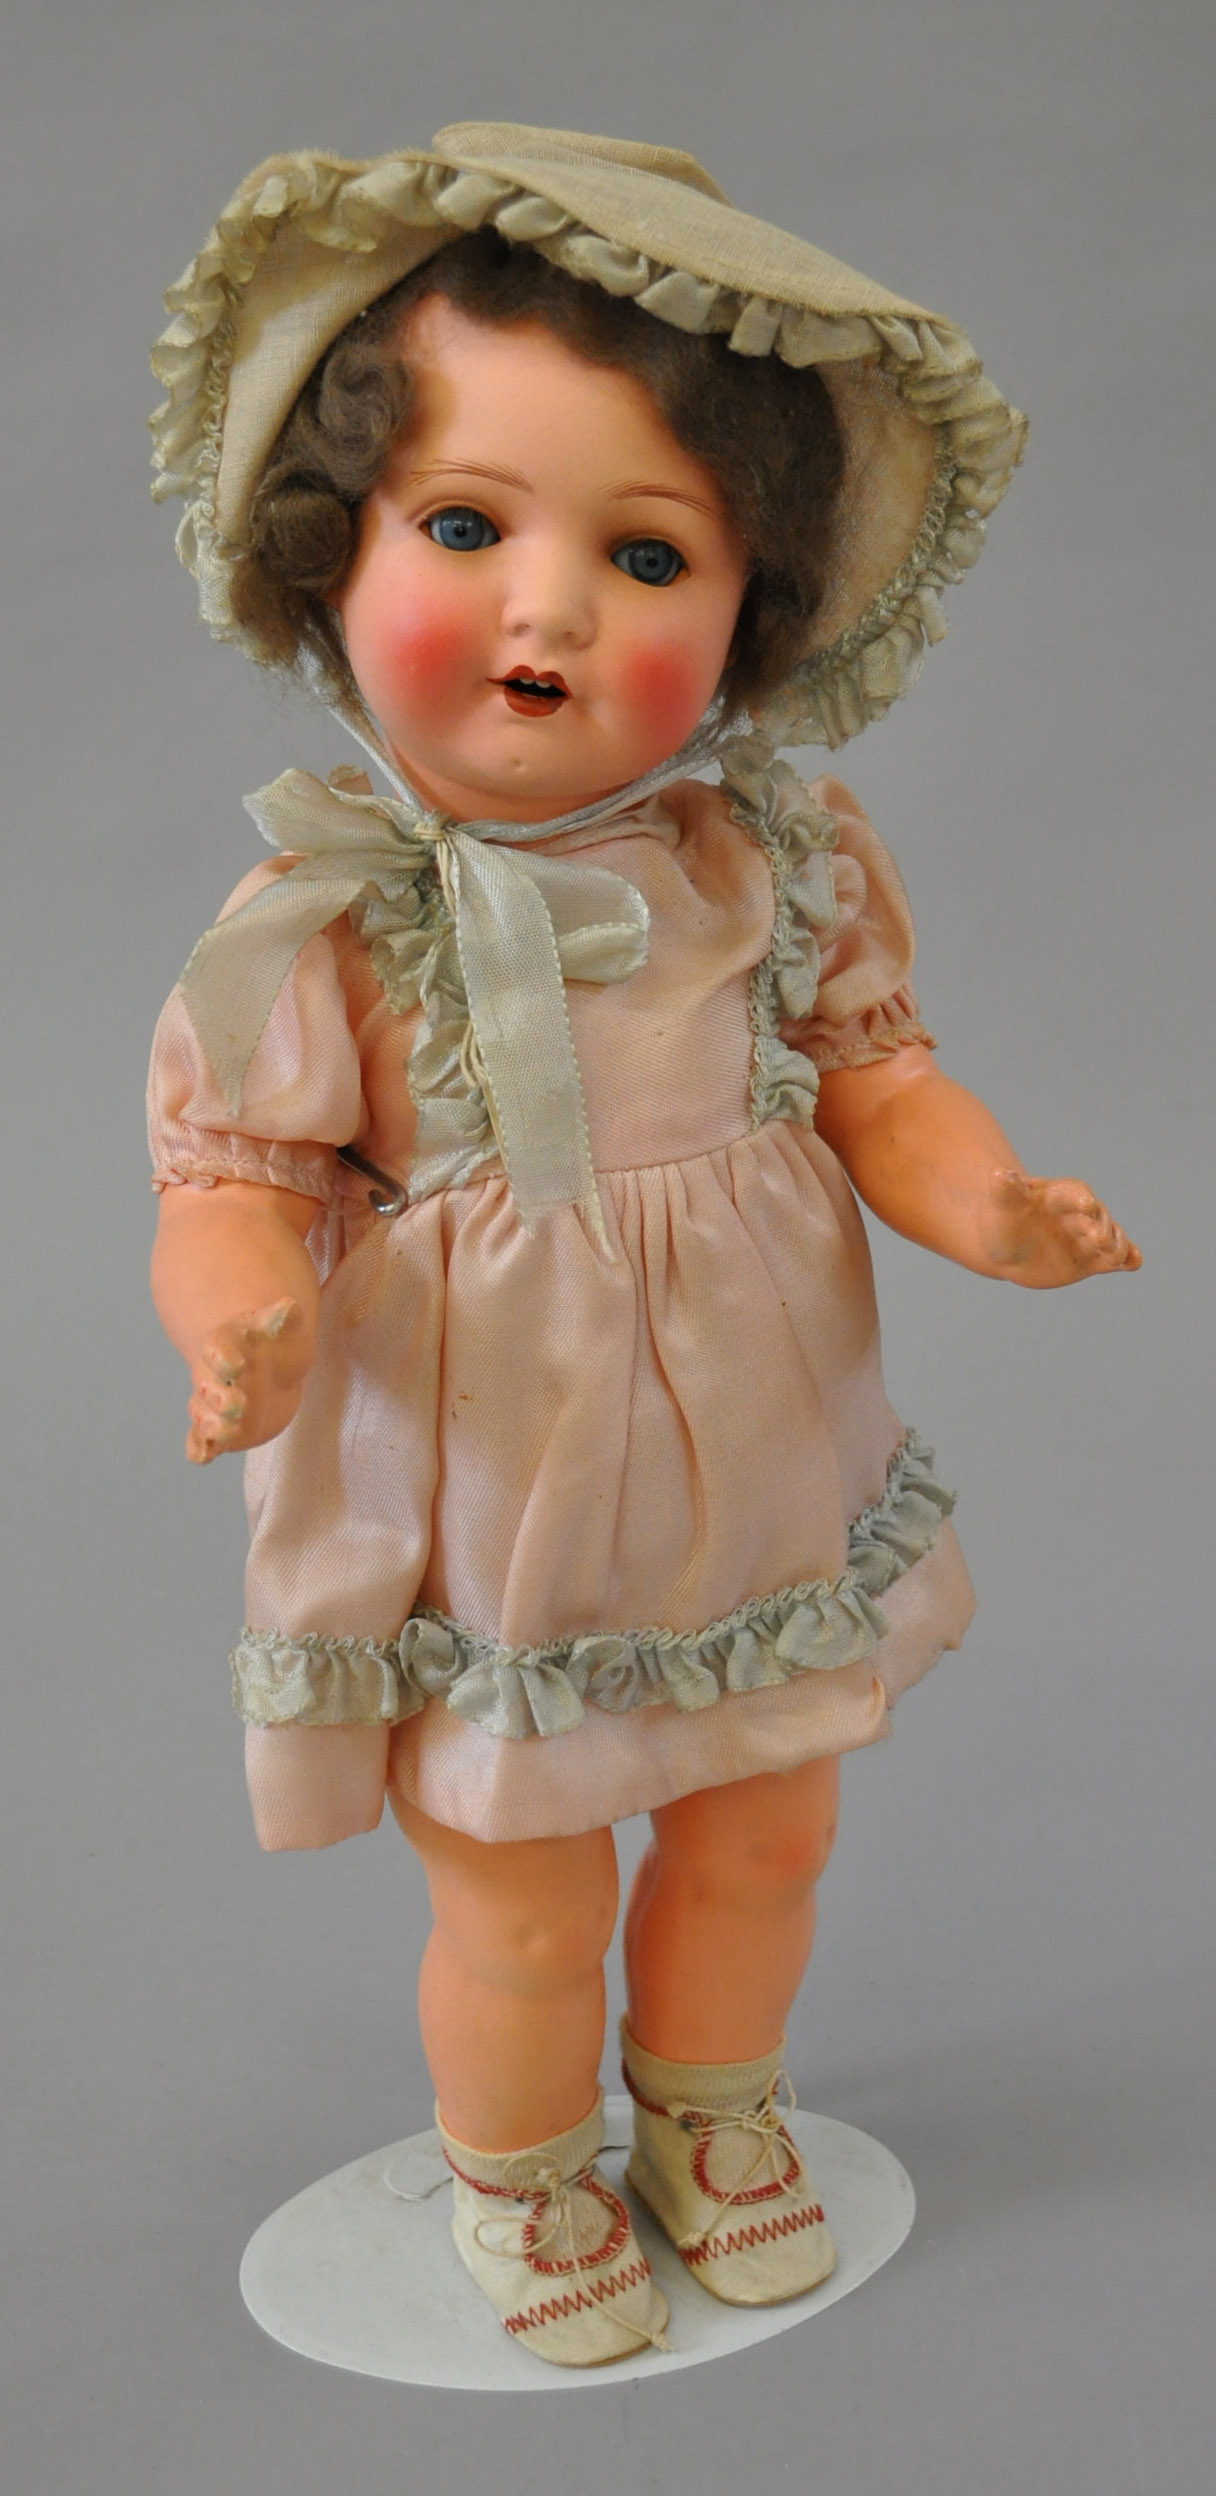 Schoenau & Hoffmeister (Germany) `170-1` bisque head composition body girl doll, having sleeping